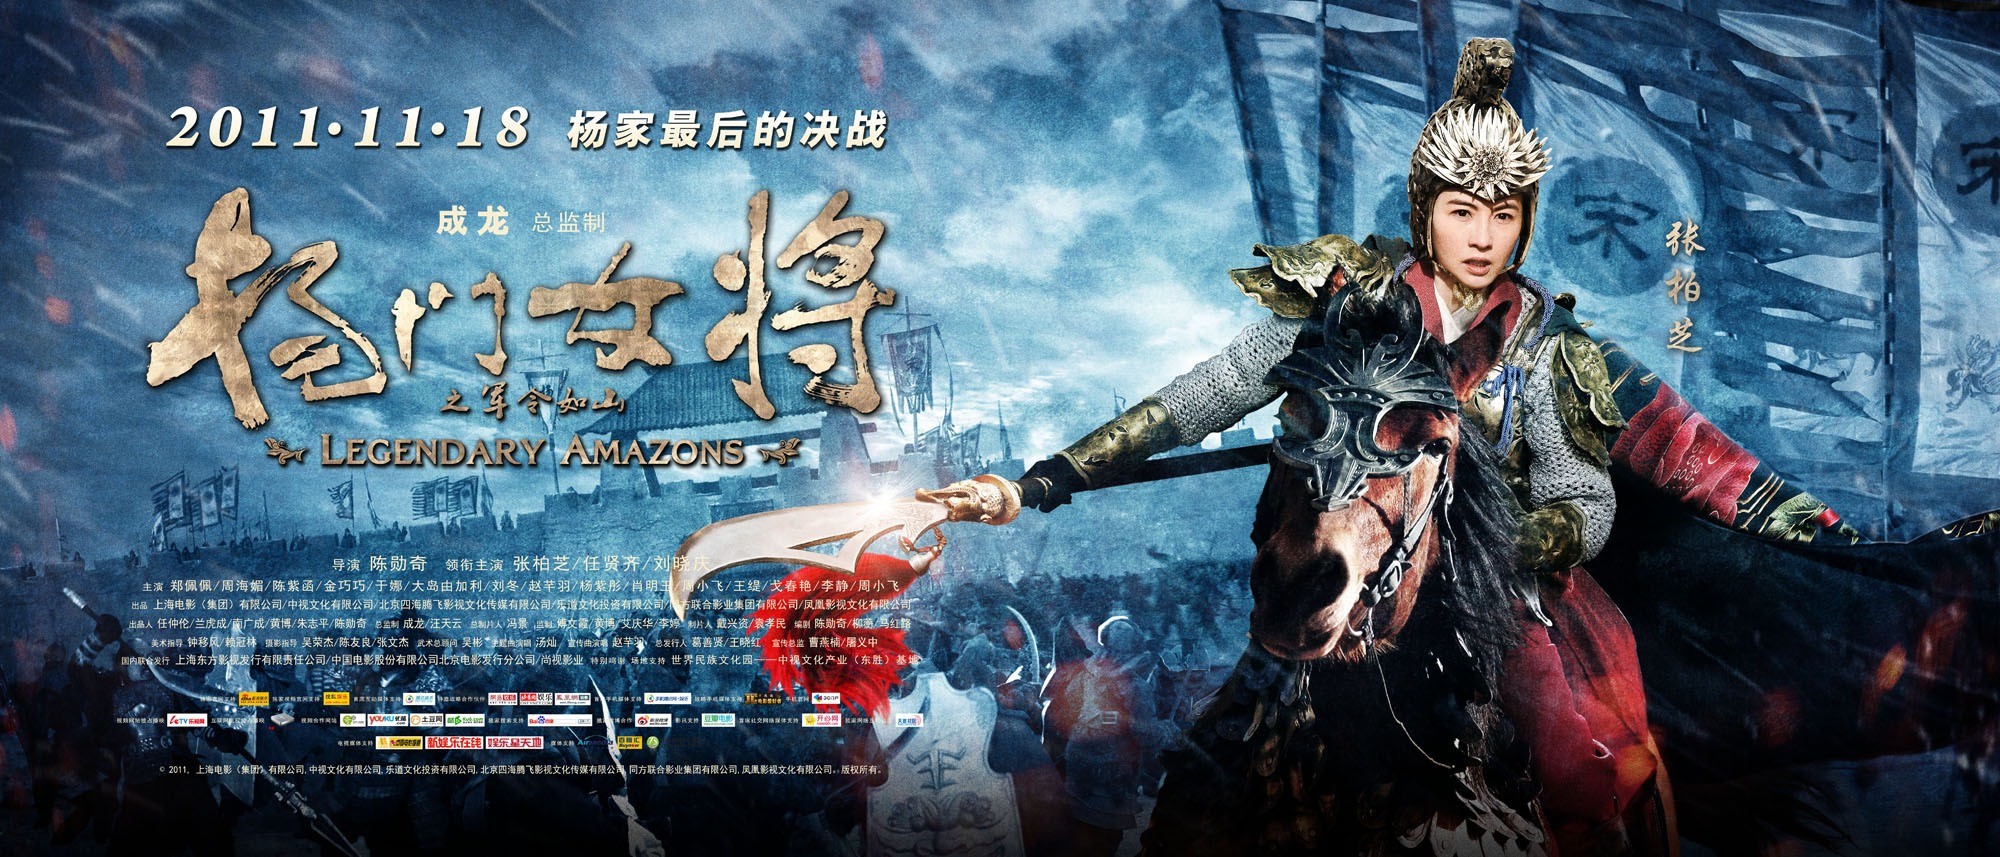 Mega Sized Movie Poster Image for Legendary Amazons (#3 of 7)